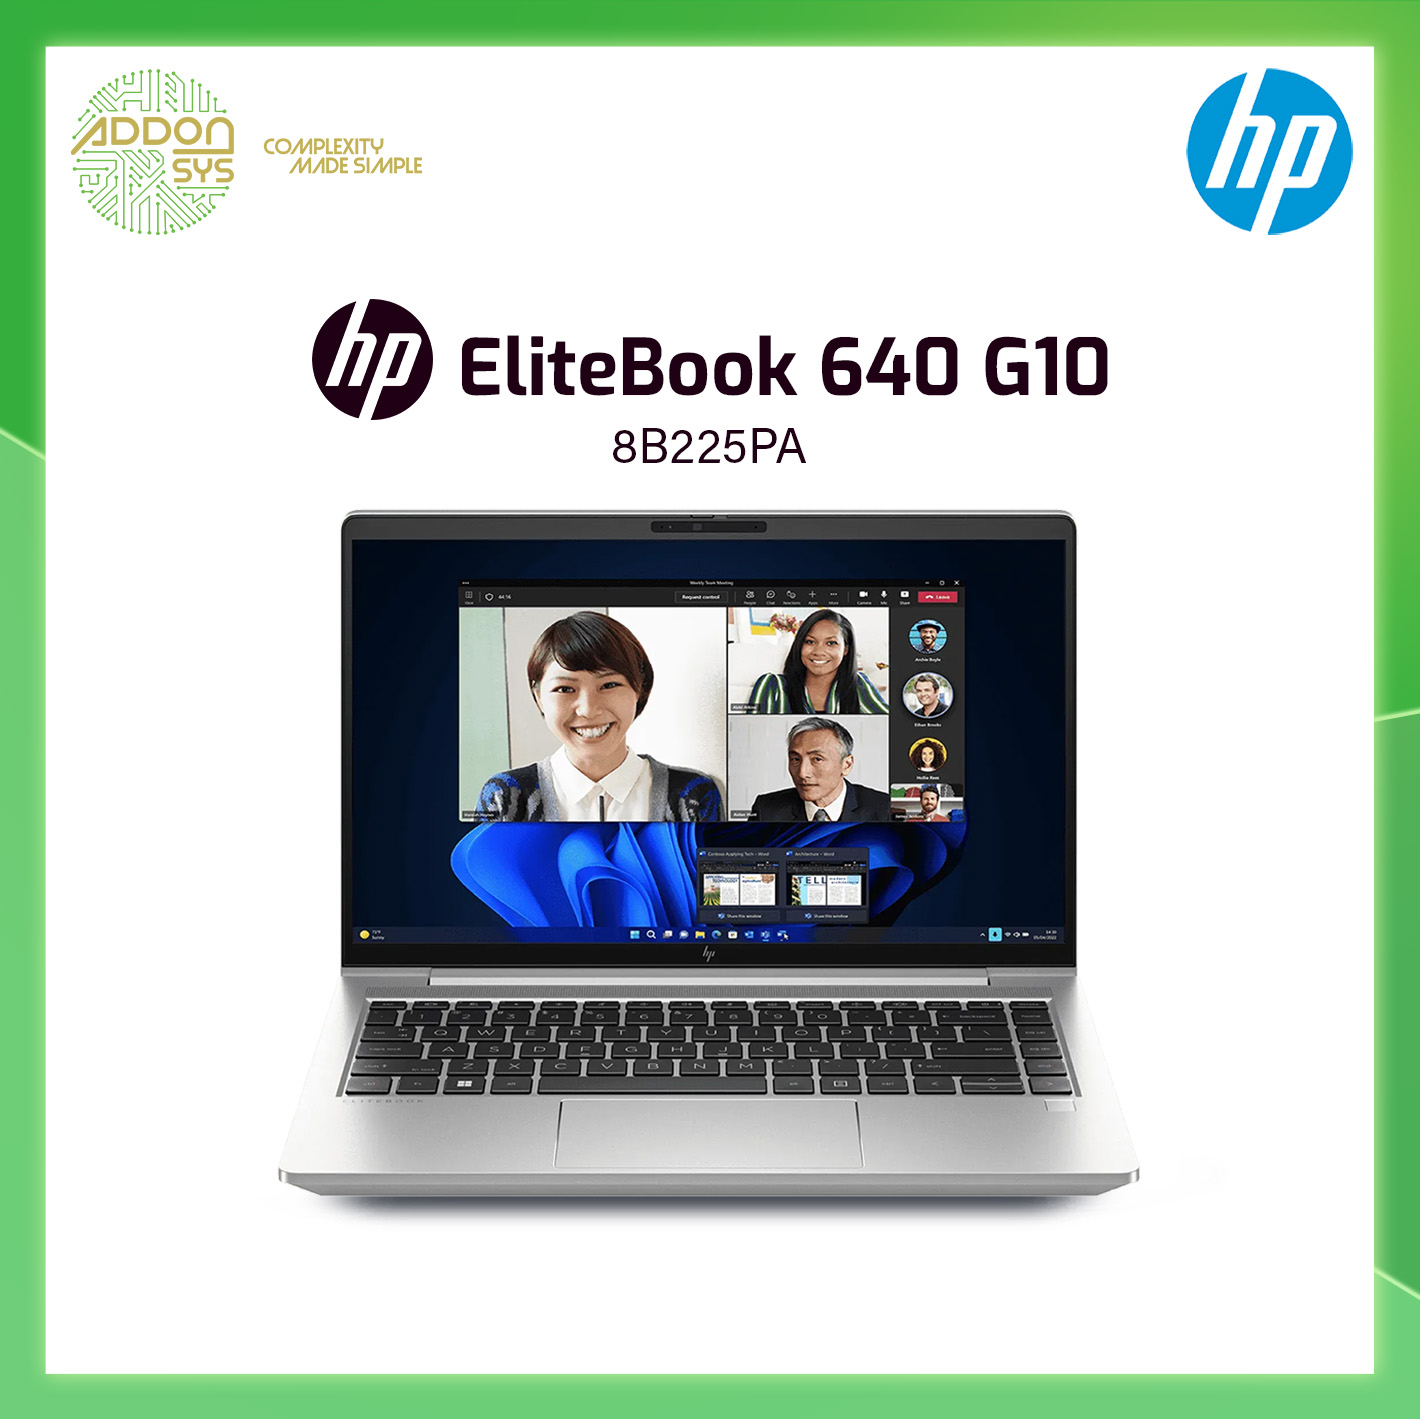 HP EliteBook 640 G10 Notebook PC 8B225PA